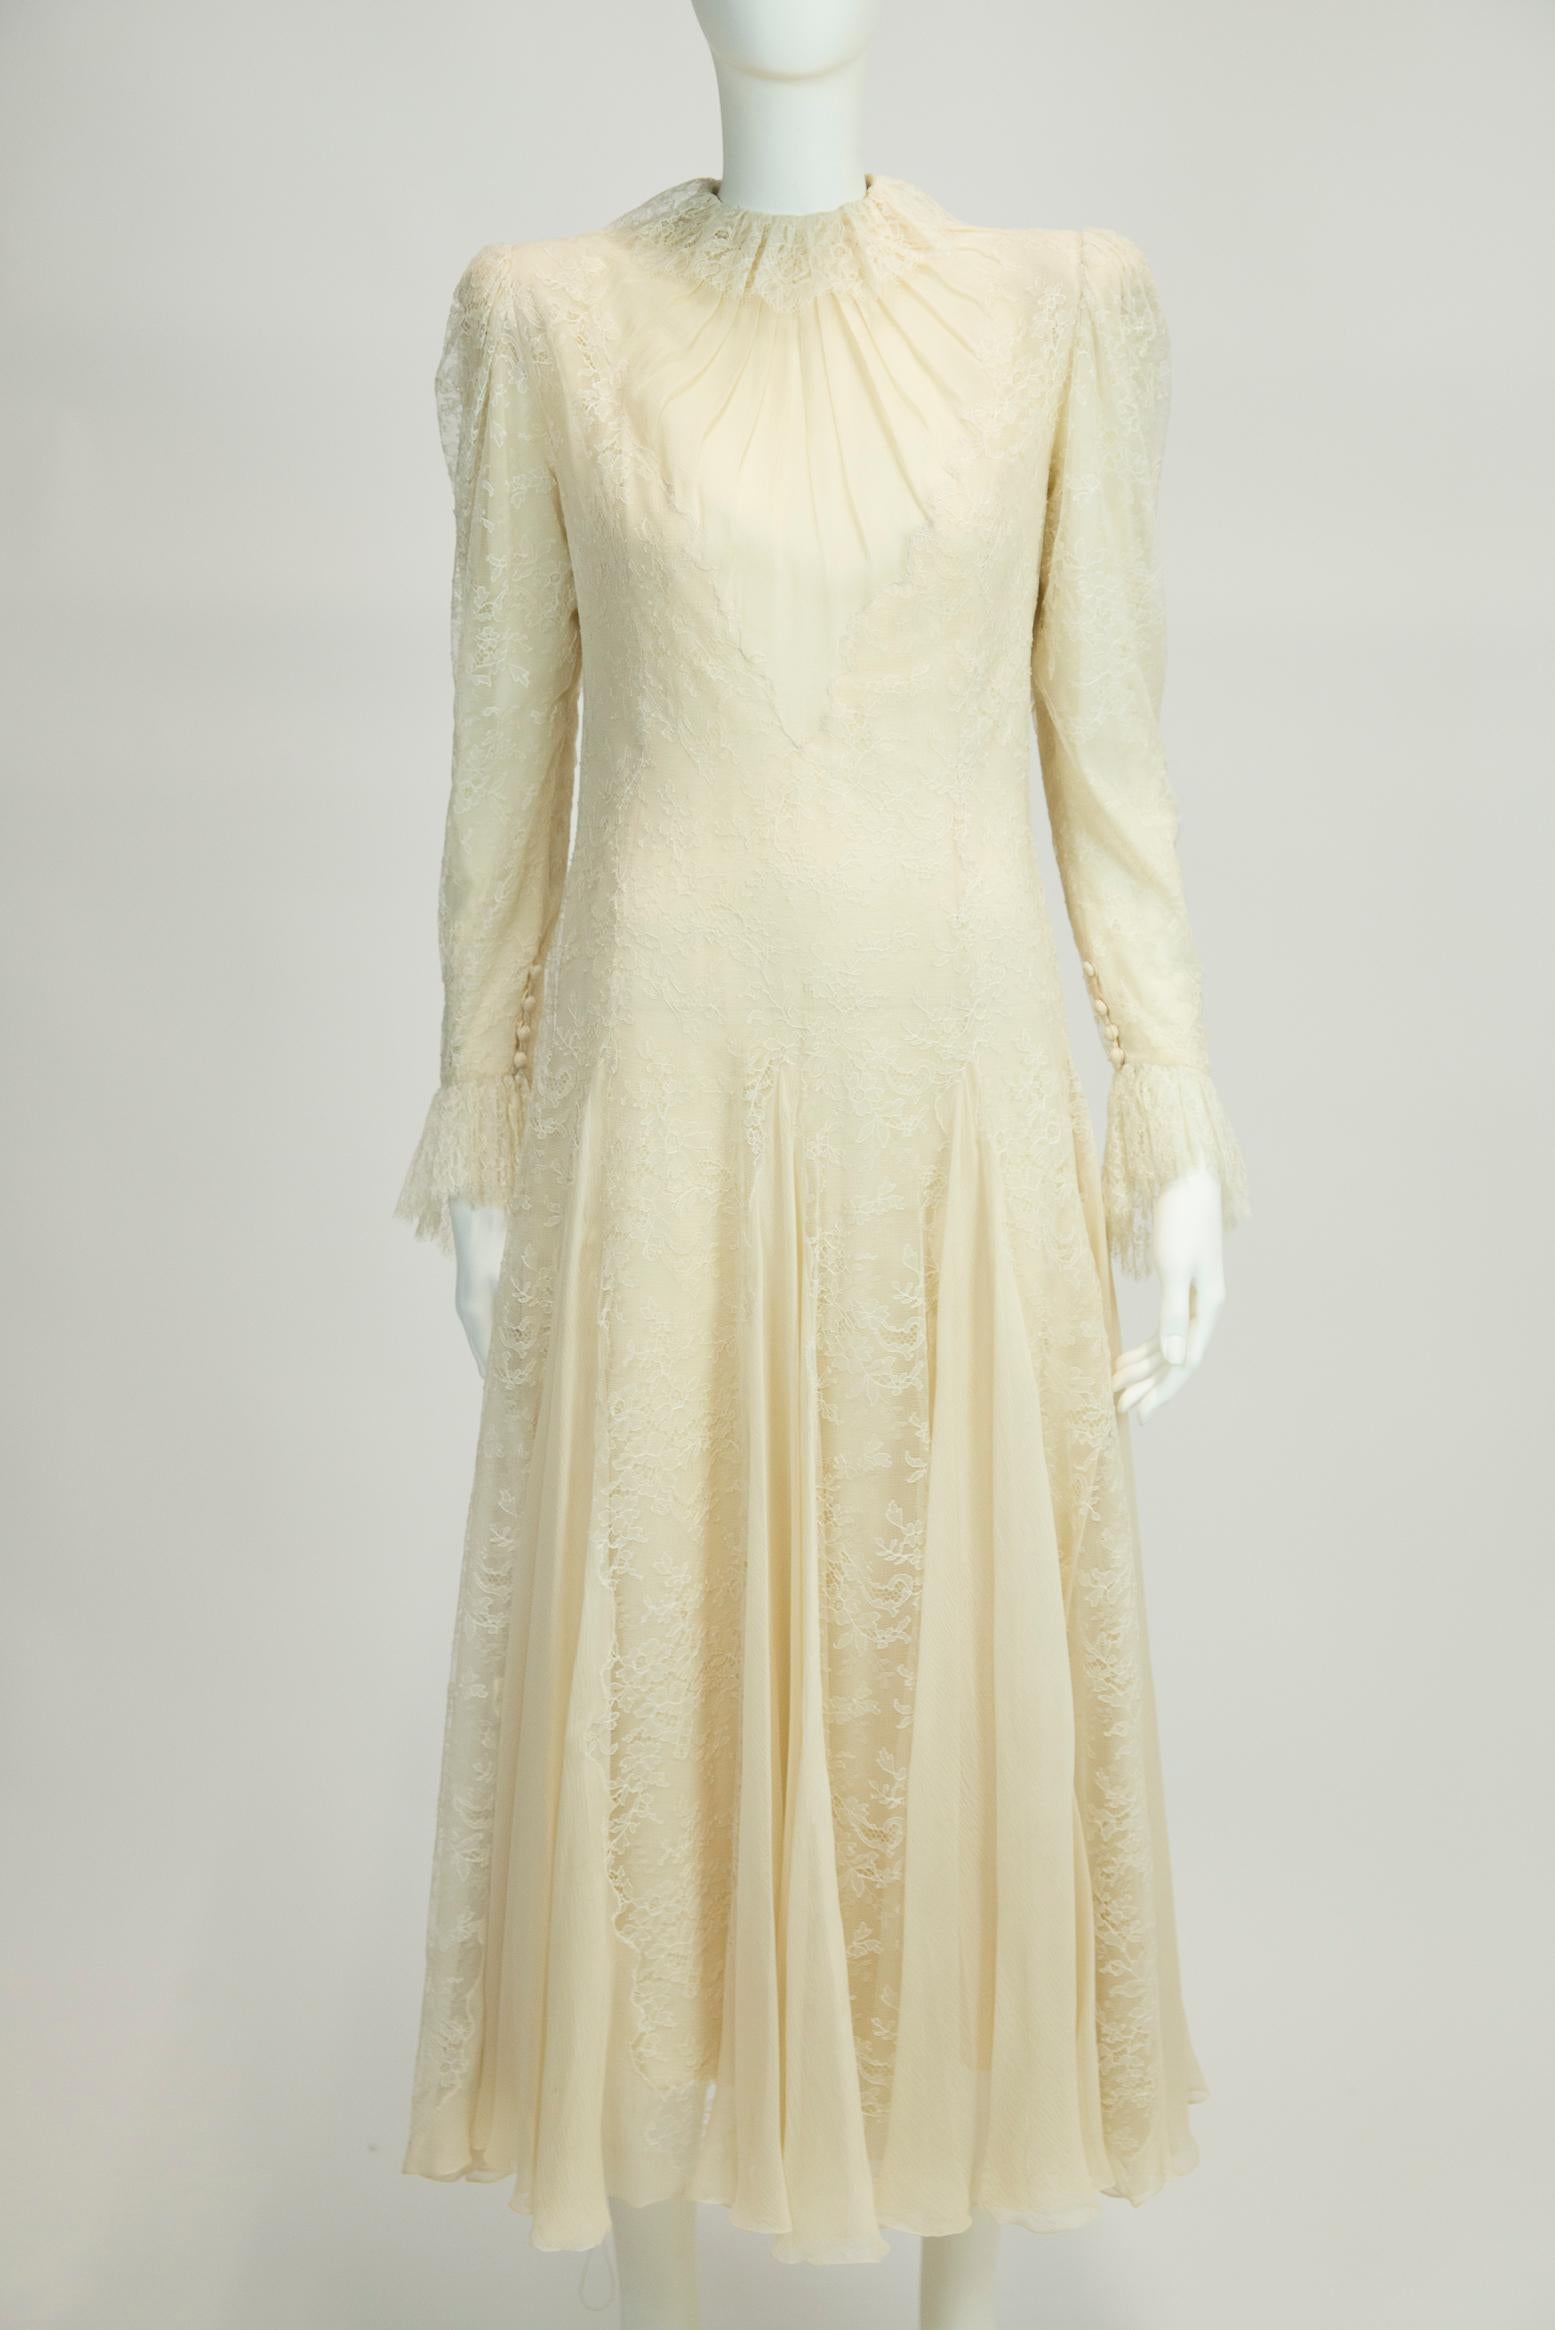 Beige Exquisite Jean Louis Scherrer Couture Silk Chiffon & Lace-Trimmed Dress For Sale